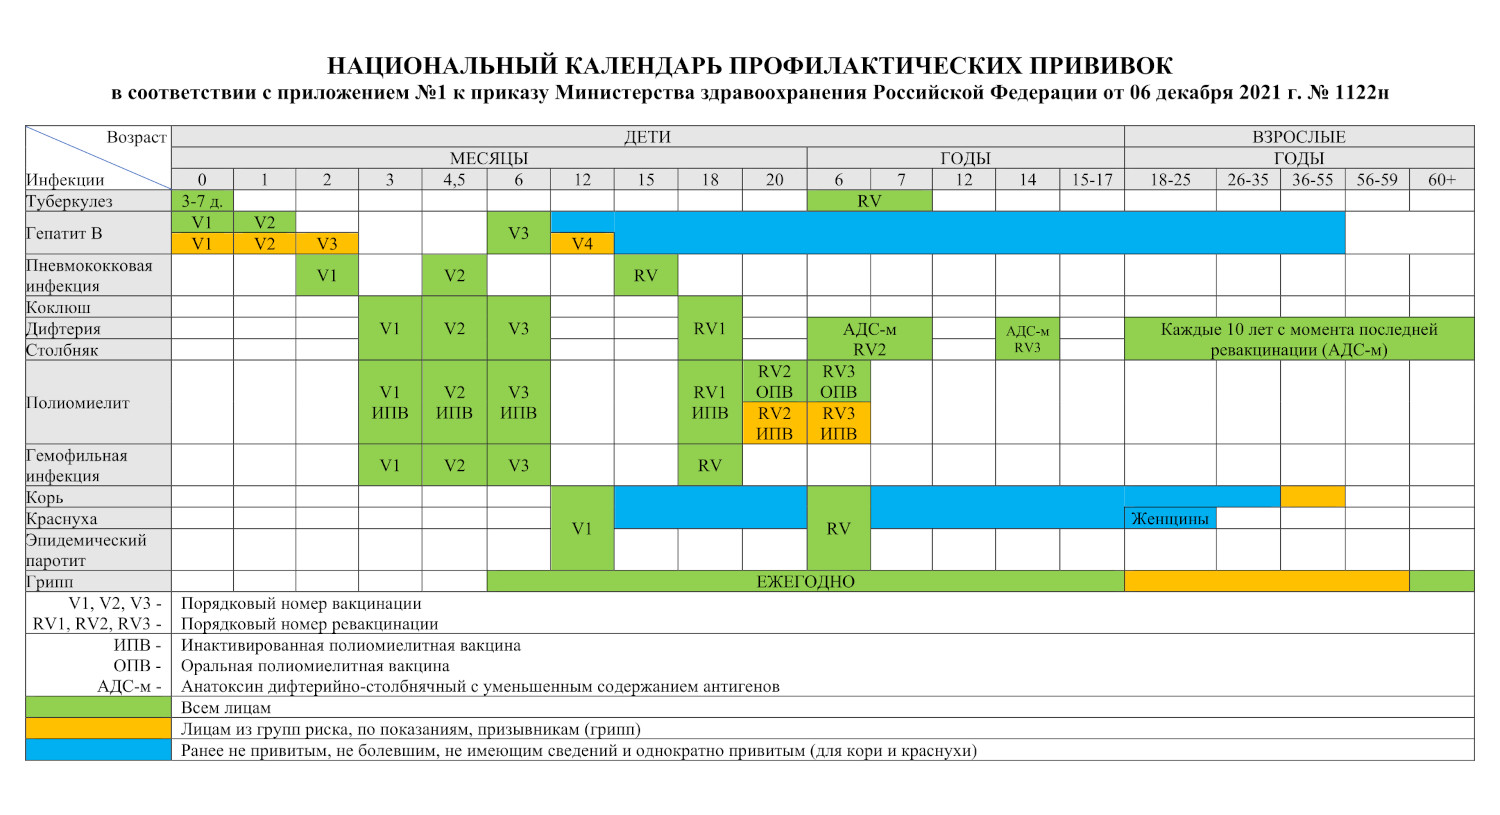 nacionalniy kalendar profilakticheskih privivok b1122н